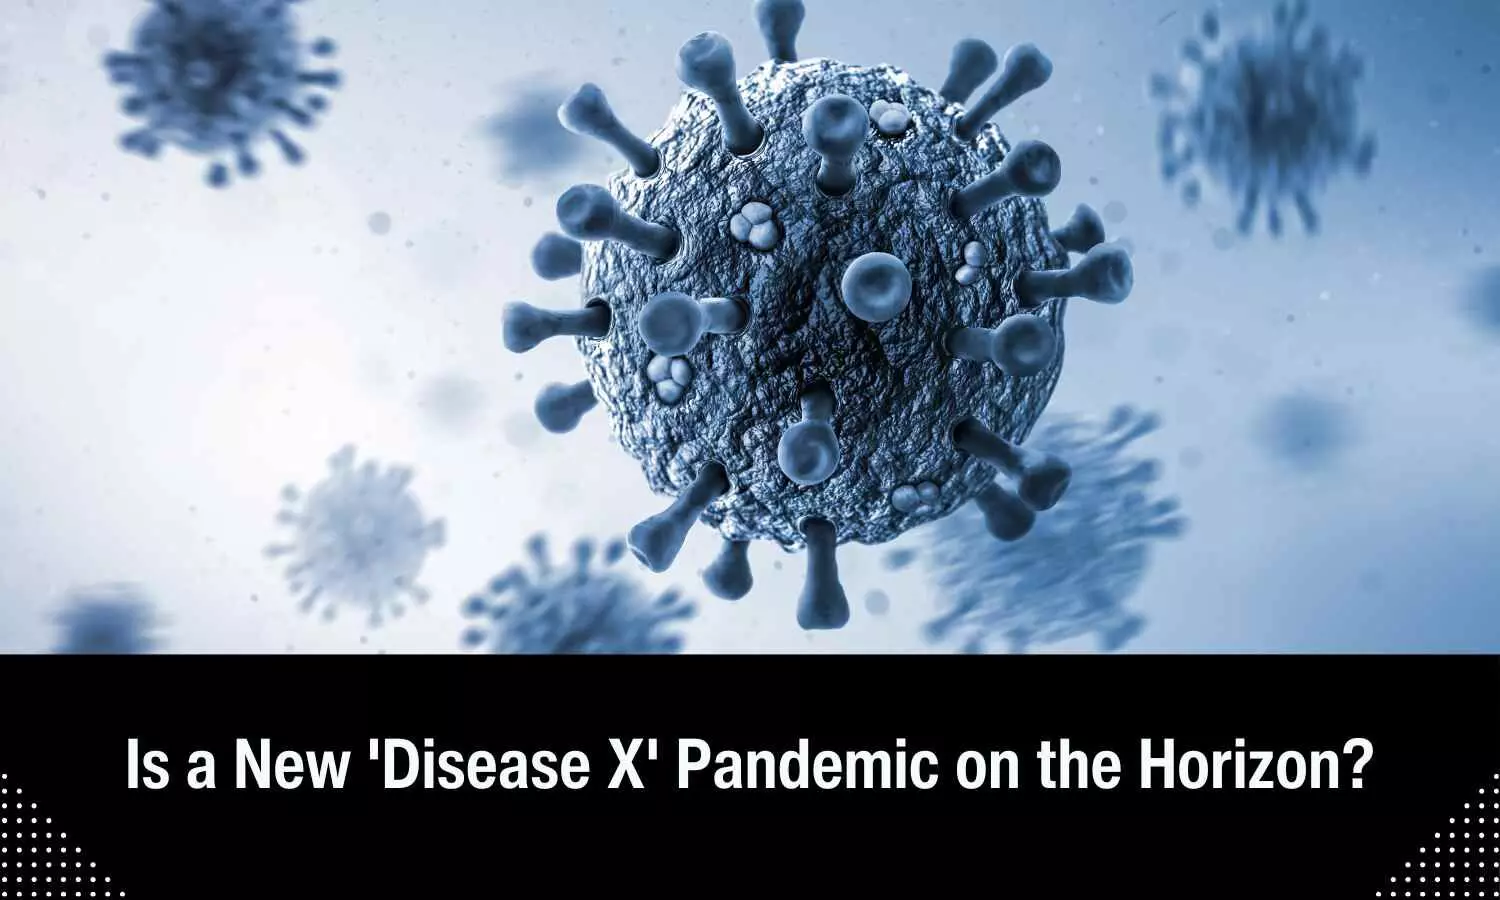 Is Disease X pandemic on Horizon?